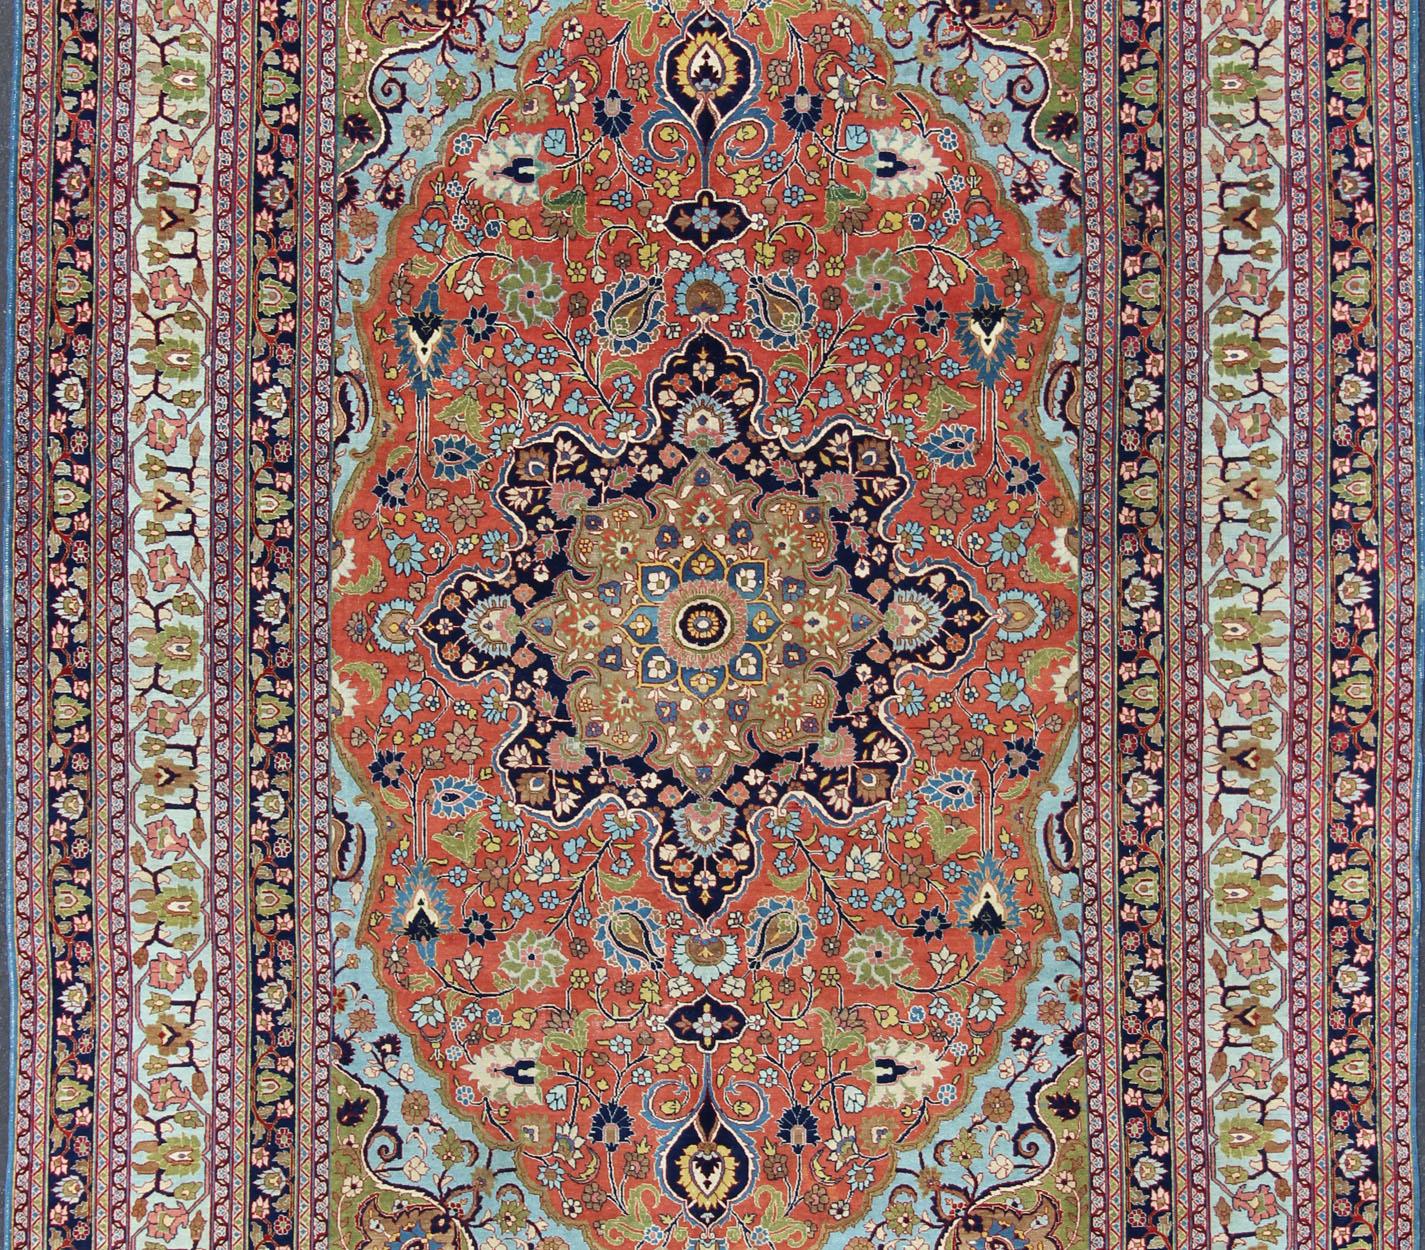 Hand-Knotted Antique Fine Persian Classic Design Tabriz Rug in Orange, Blue & Multi Colors For Sale